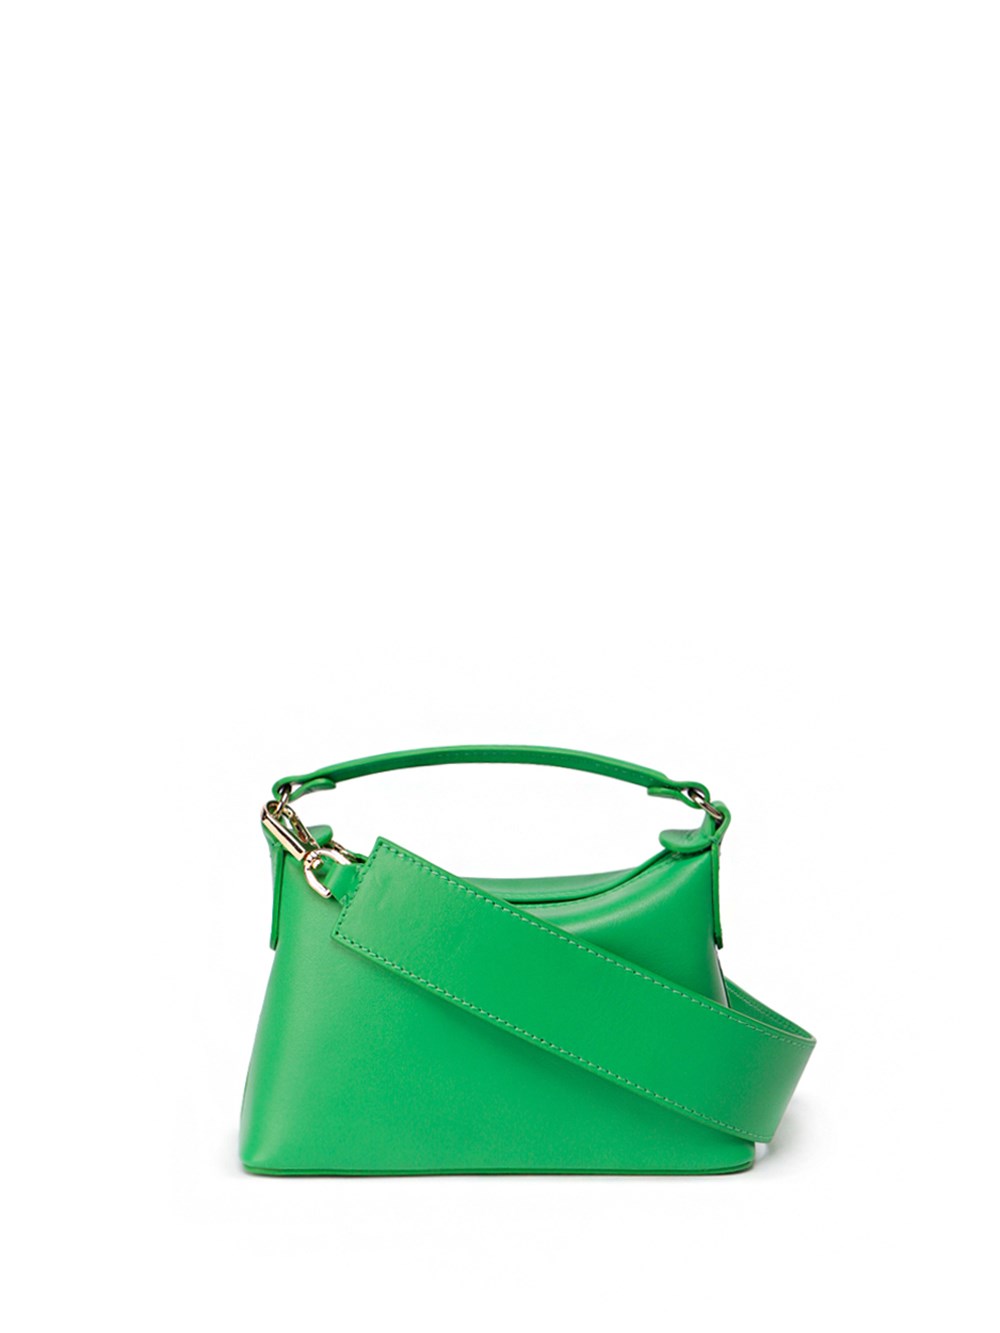 Liu •jo Mini Hobo Hand Bag In Green Leather